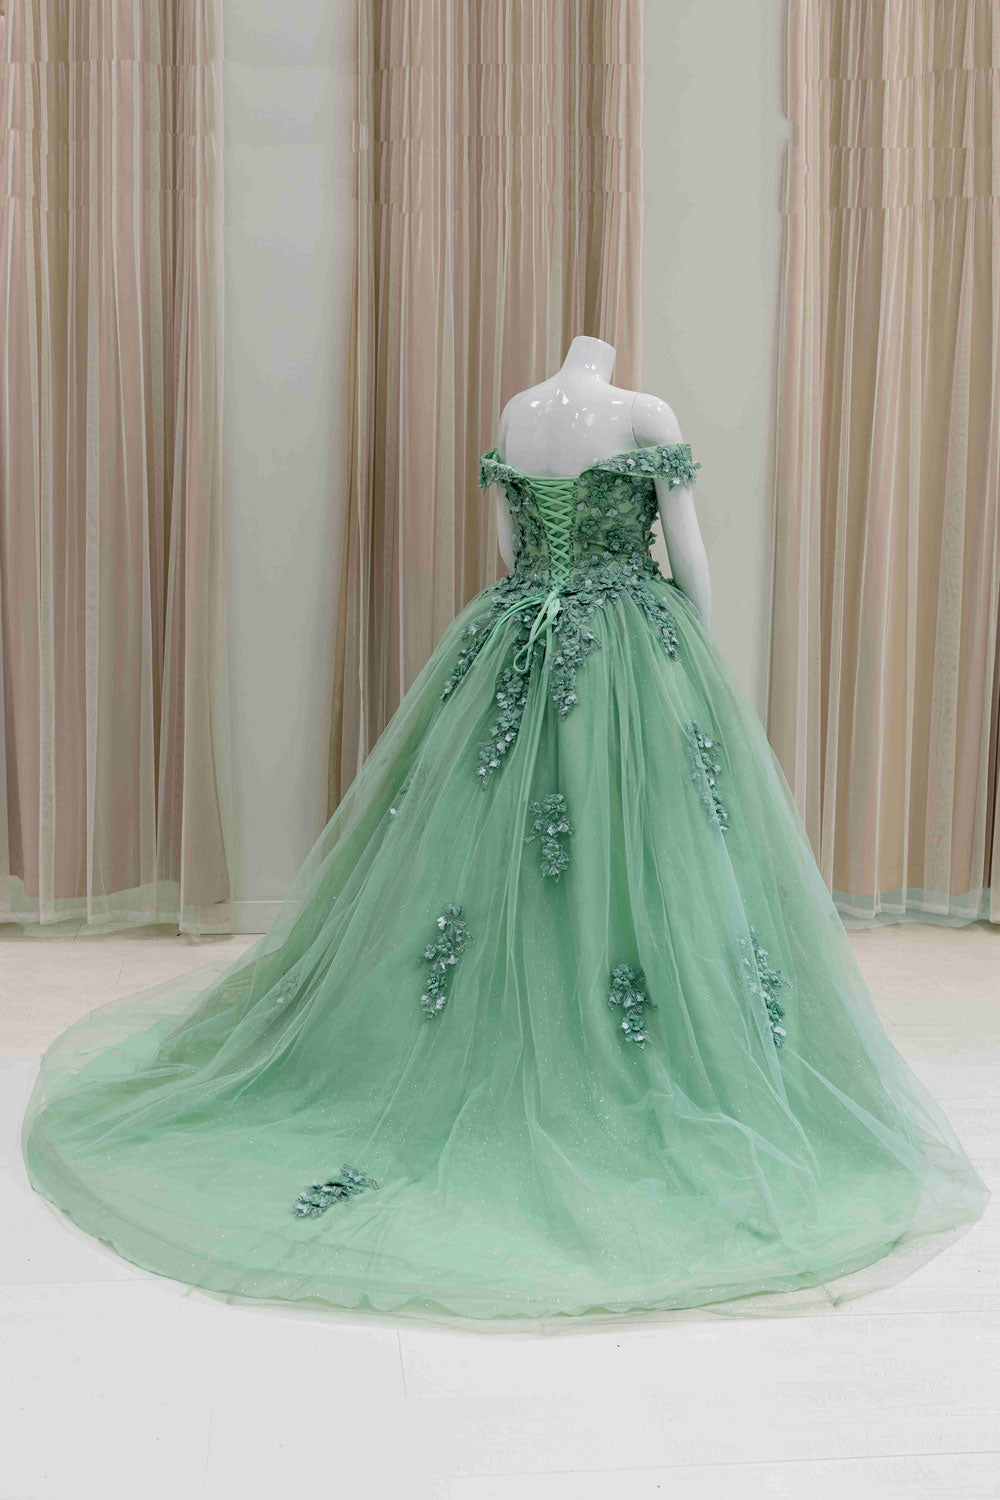 Enchanted Garden Themed Quinceanera Dress in Mint Green